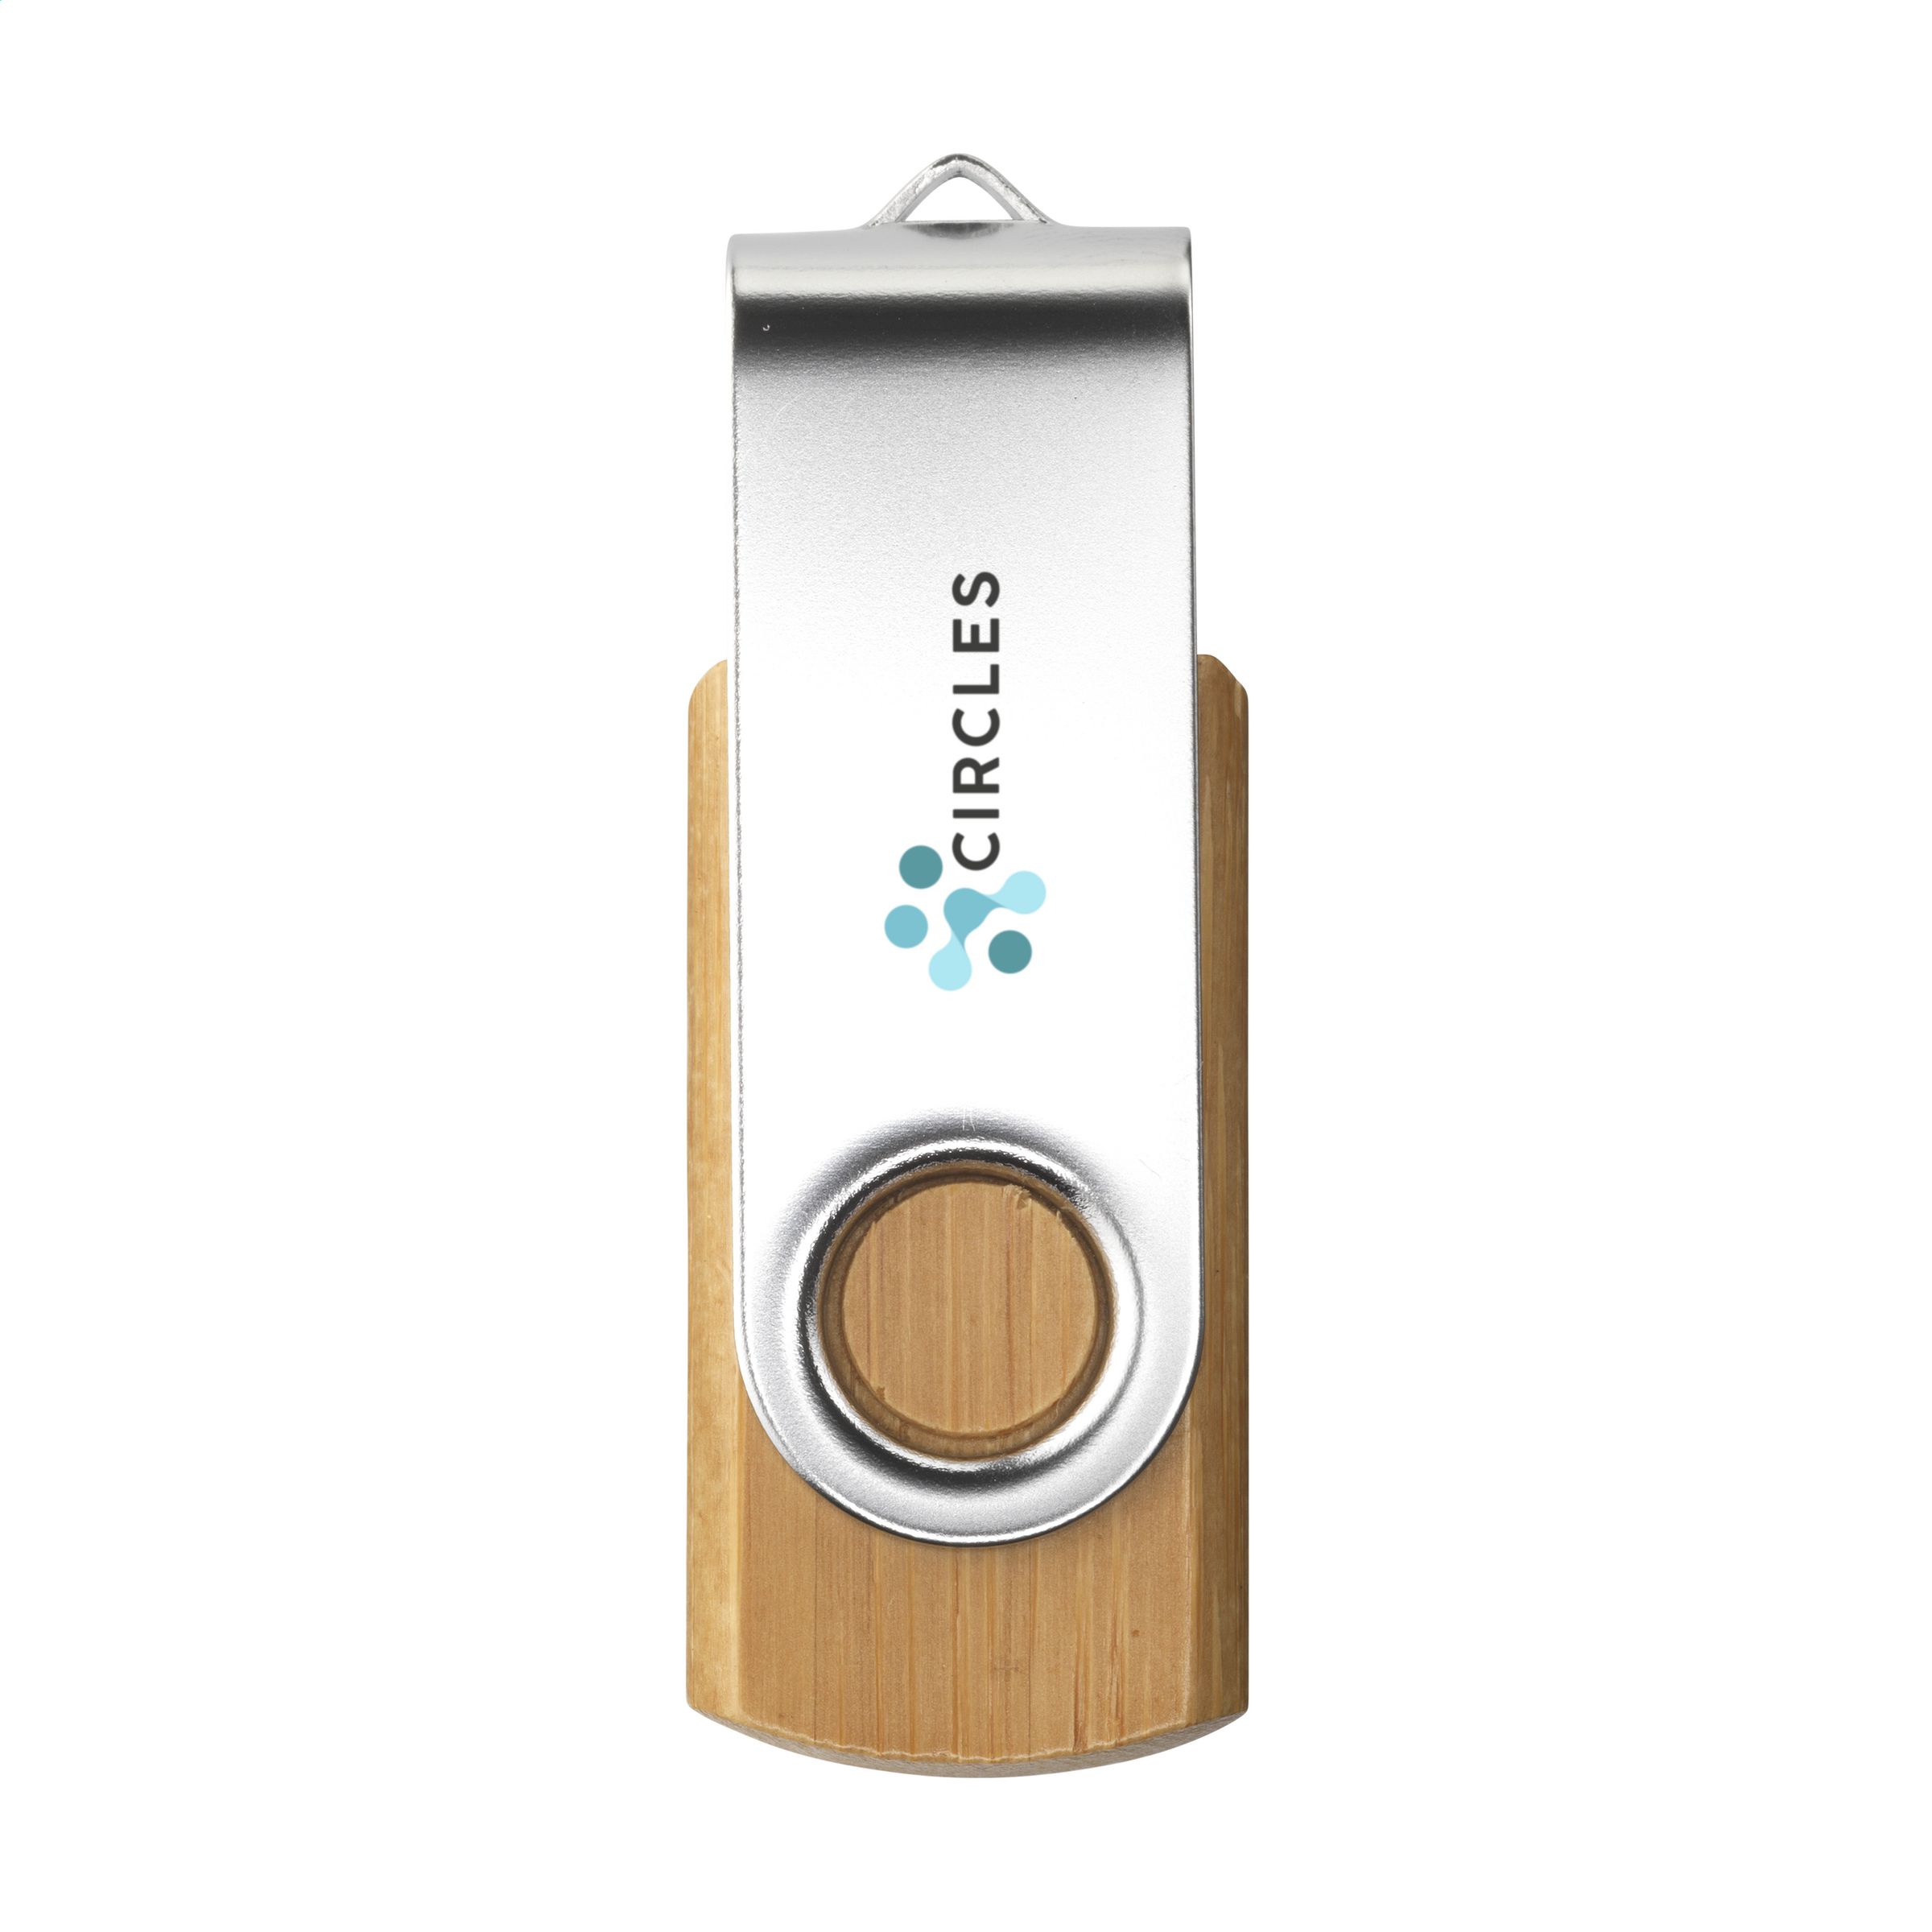 Chiavetta USB in bambù al carbonio ECO - Montecastello